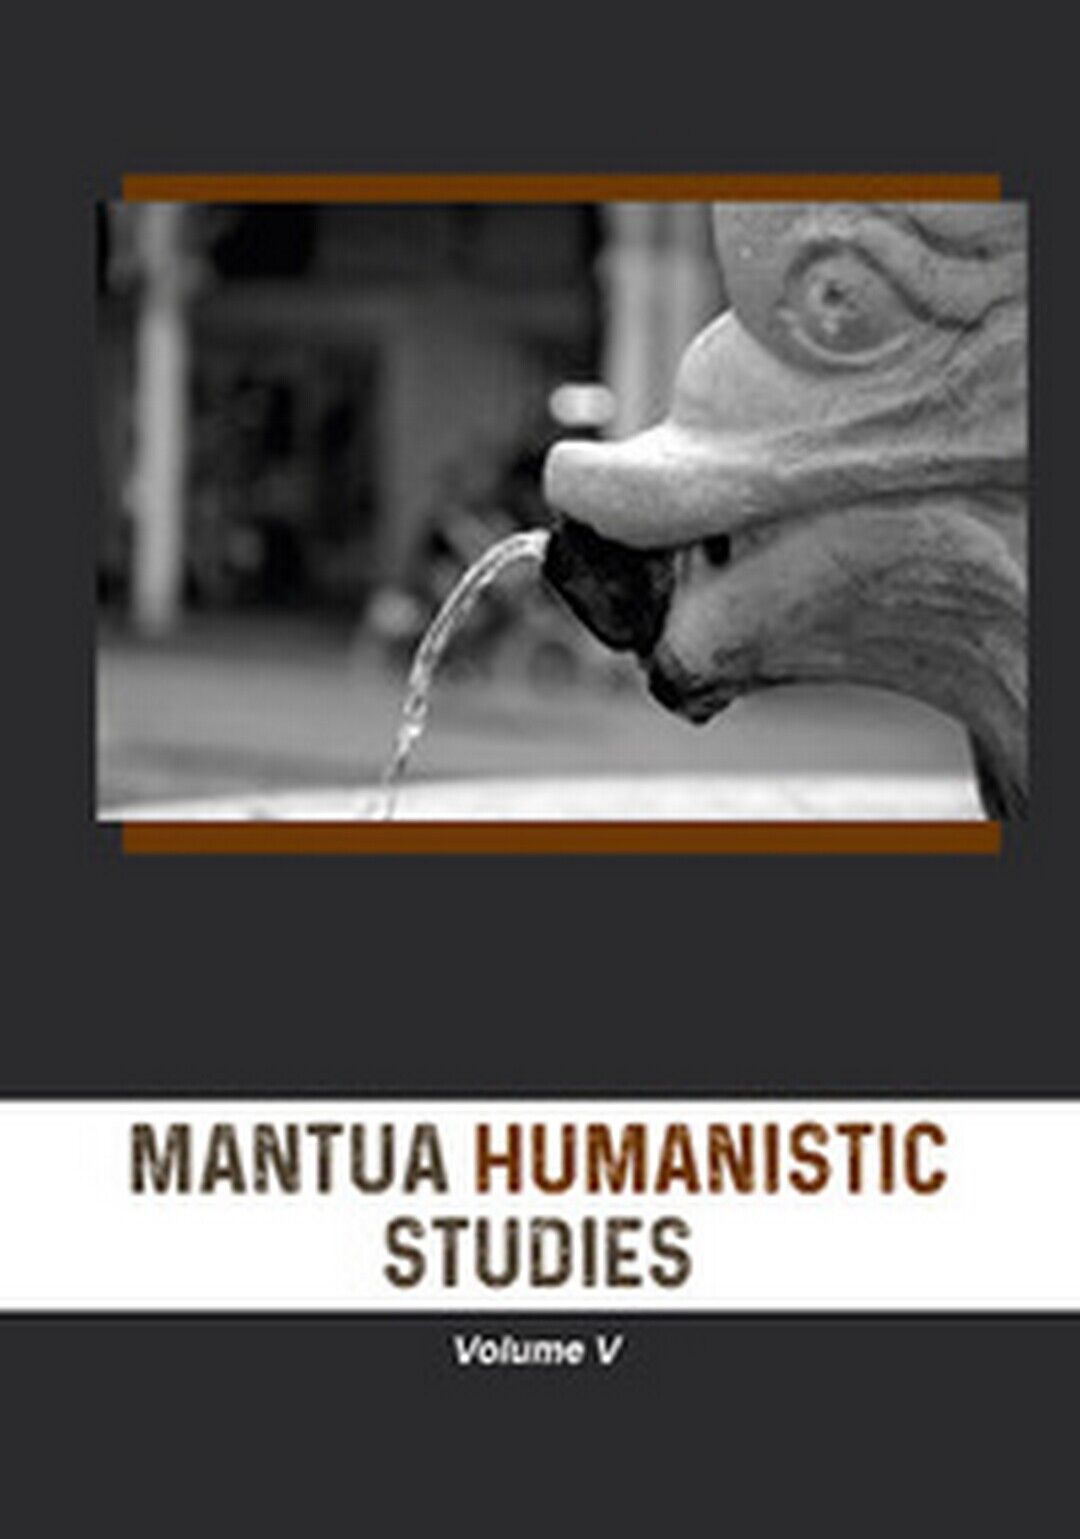 Mantua humanistic studies Vol.5  di E. Scarpanti,  2019,  Universitas Studiorum